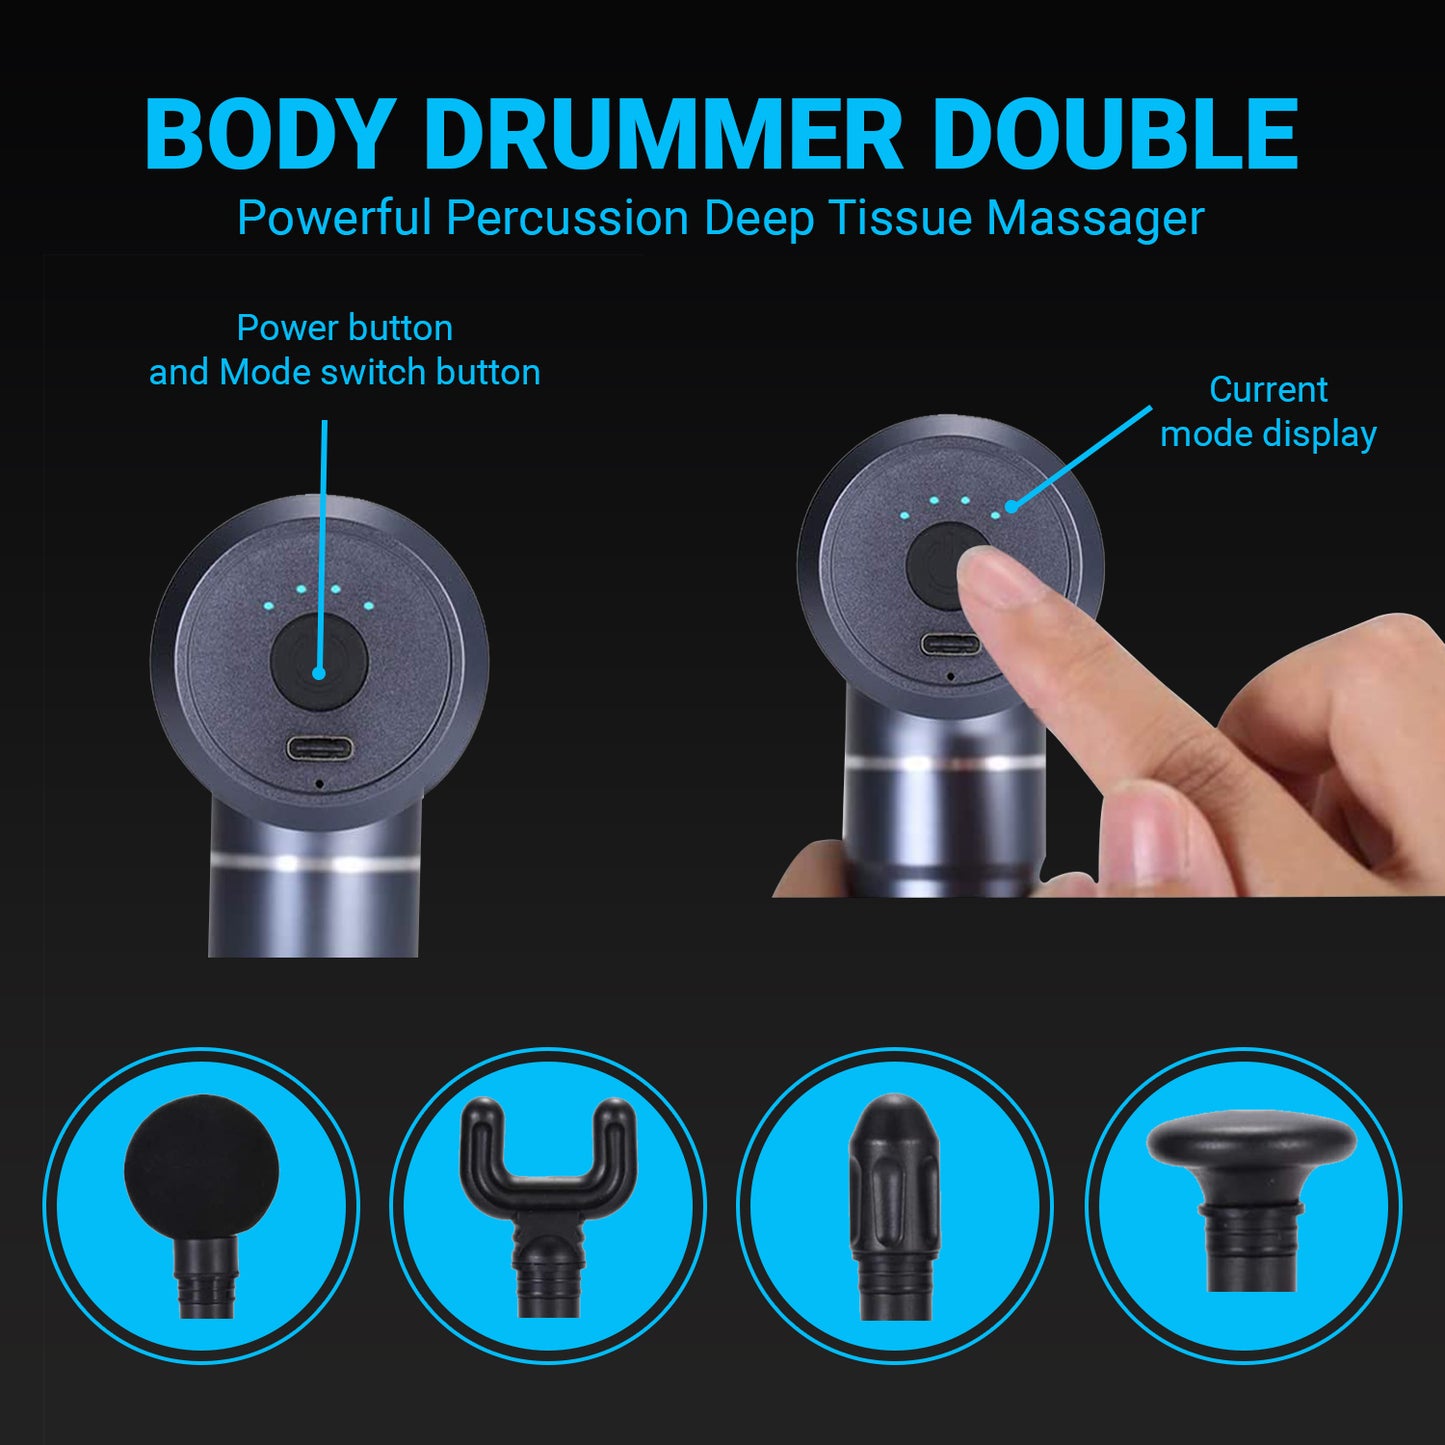 Body Drummer Double